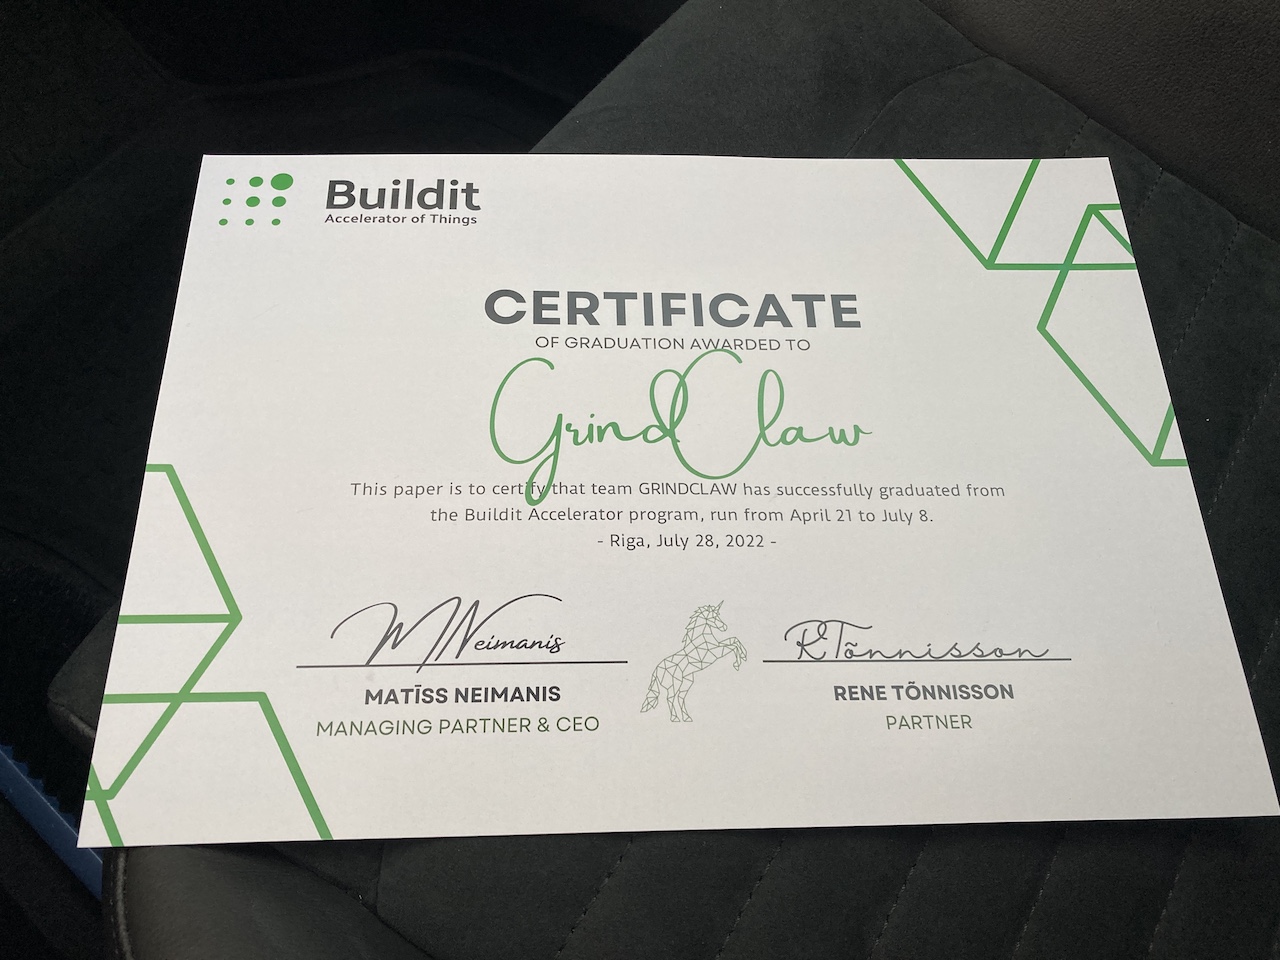 buildit-certificate-grindclaw.jpg